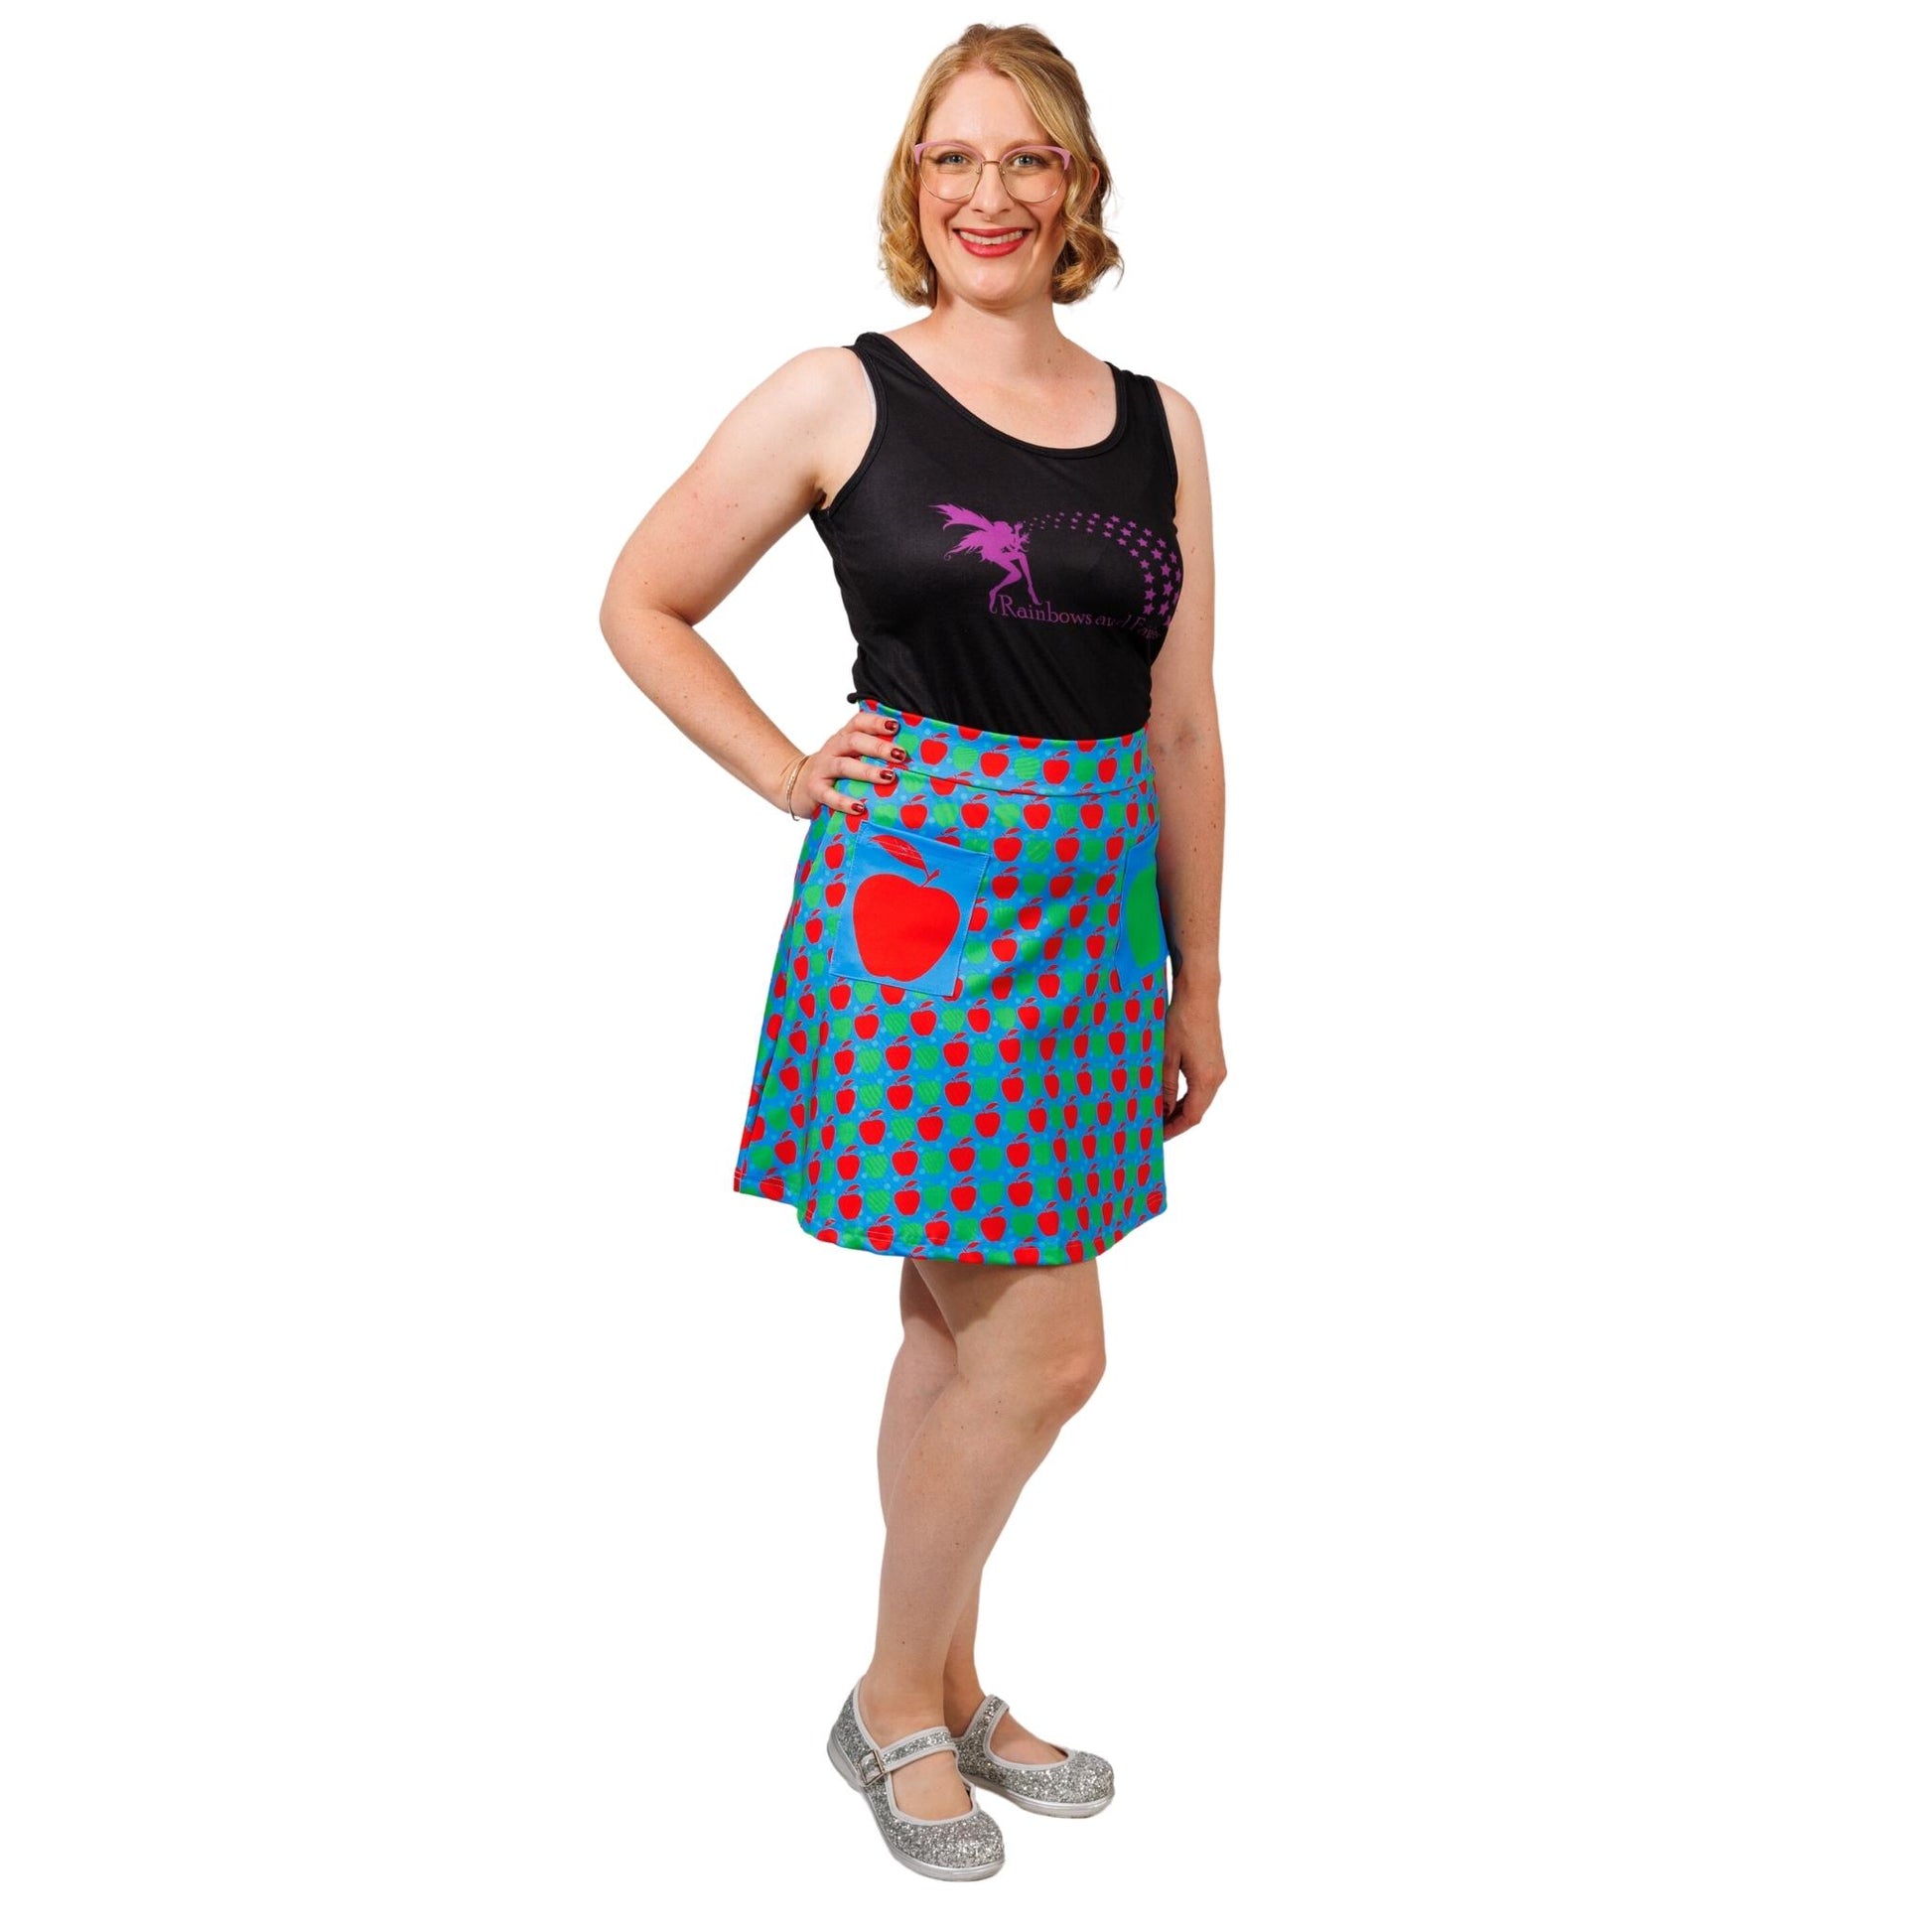 Apples Galore Short Skirt by RainbowsAndFairies.com (Red Apple - Fruit - Retro - Skirt With Pockets - Aline Skirt - Vintage Inspired) - SKU: CL_SHORT_APPGA_ORG - Pic 03